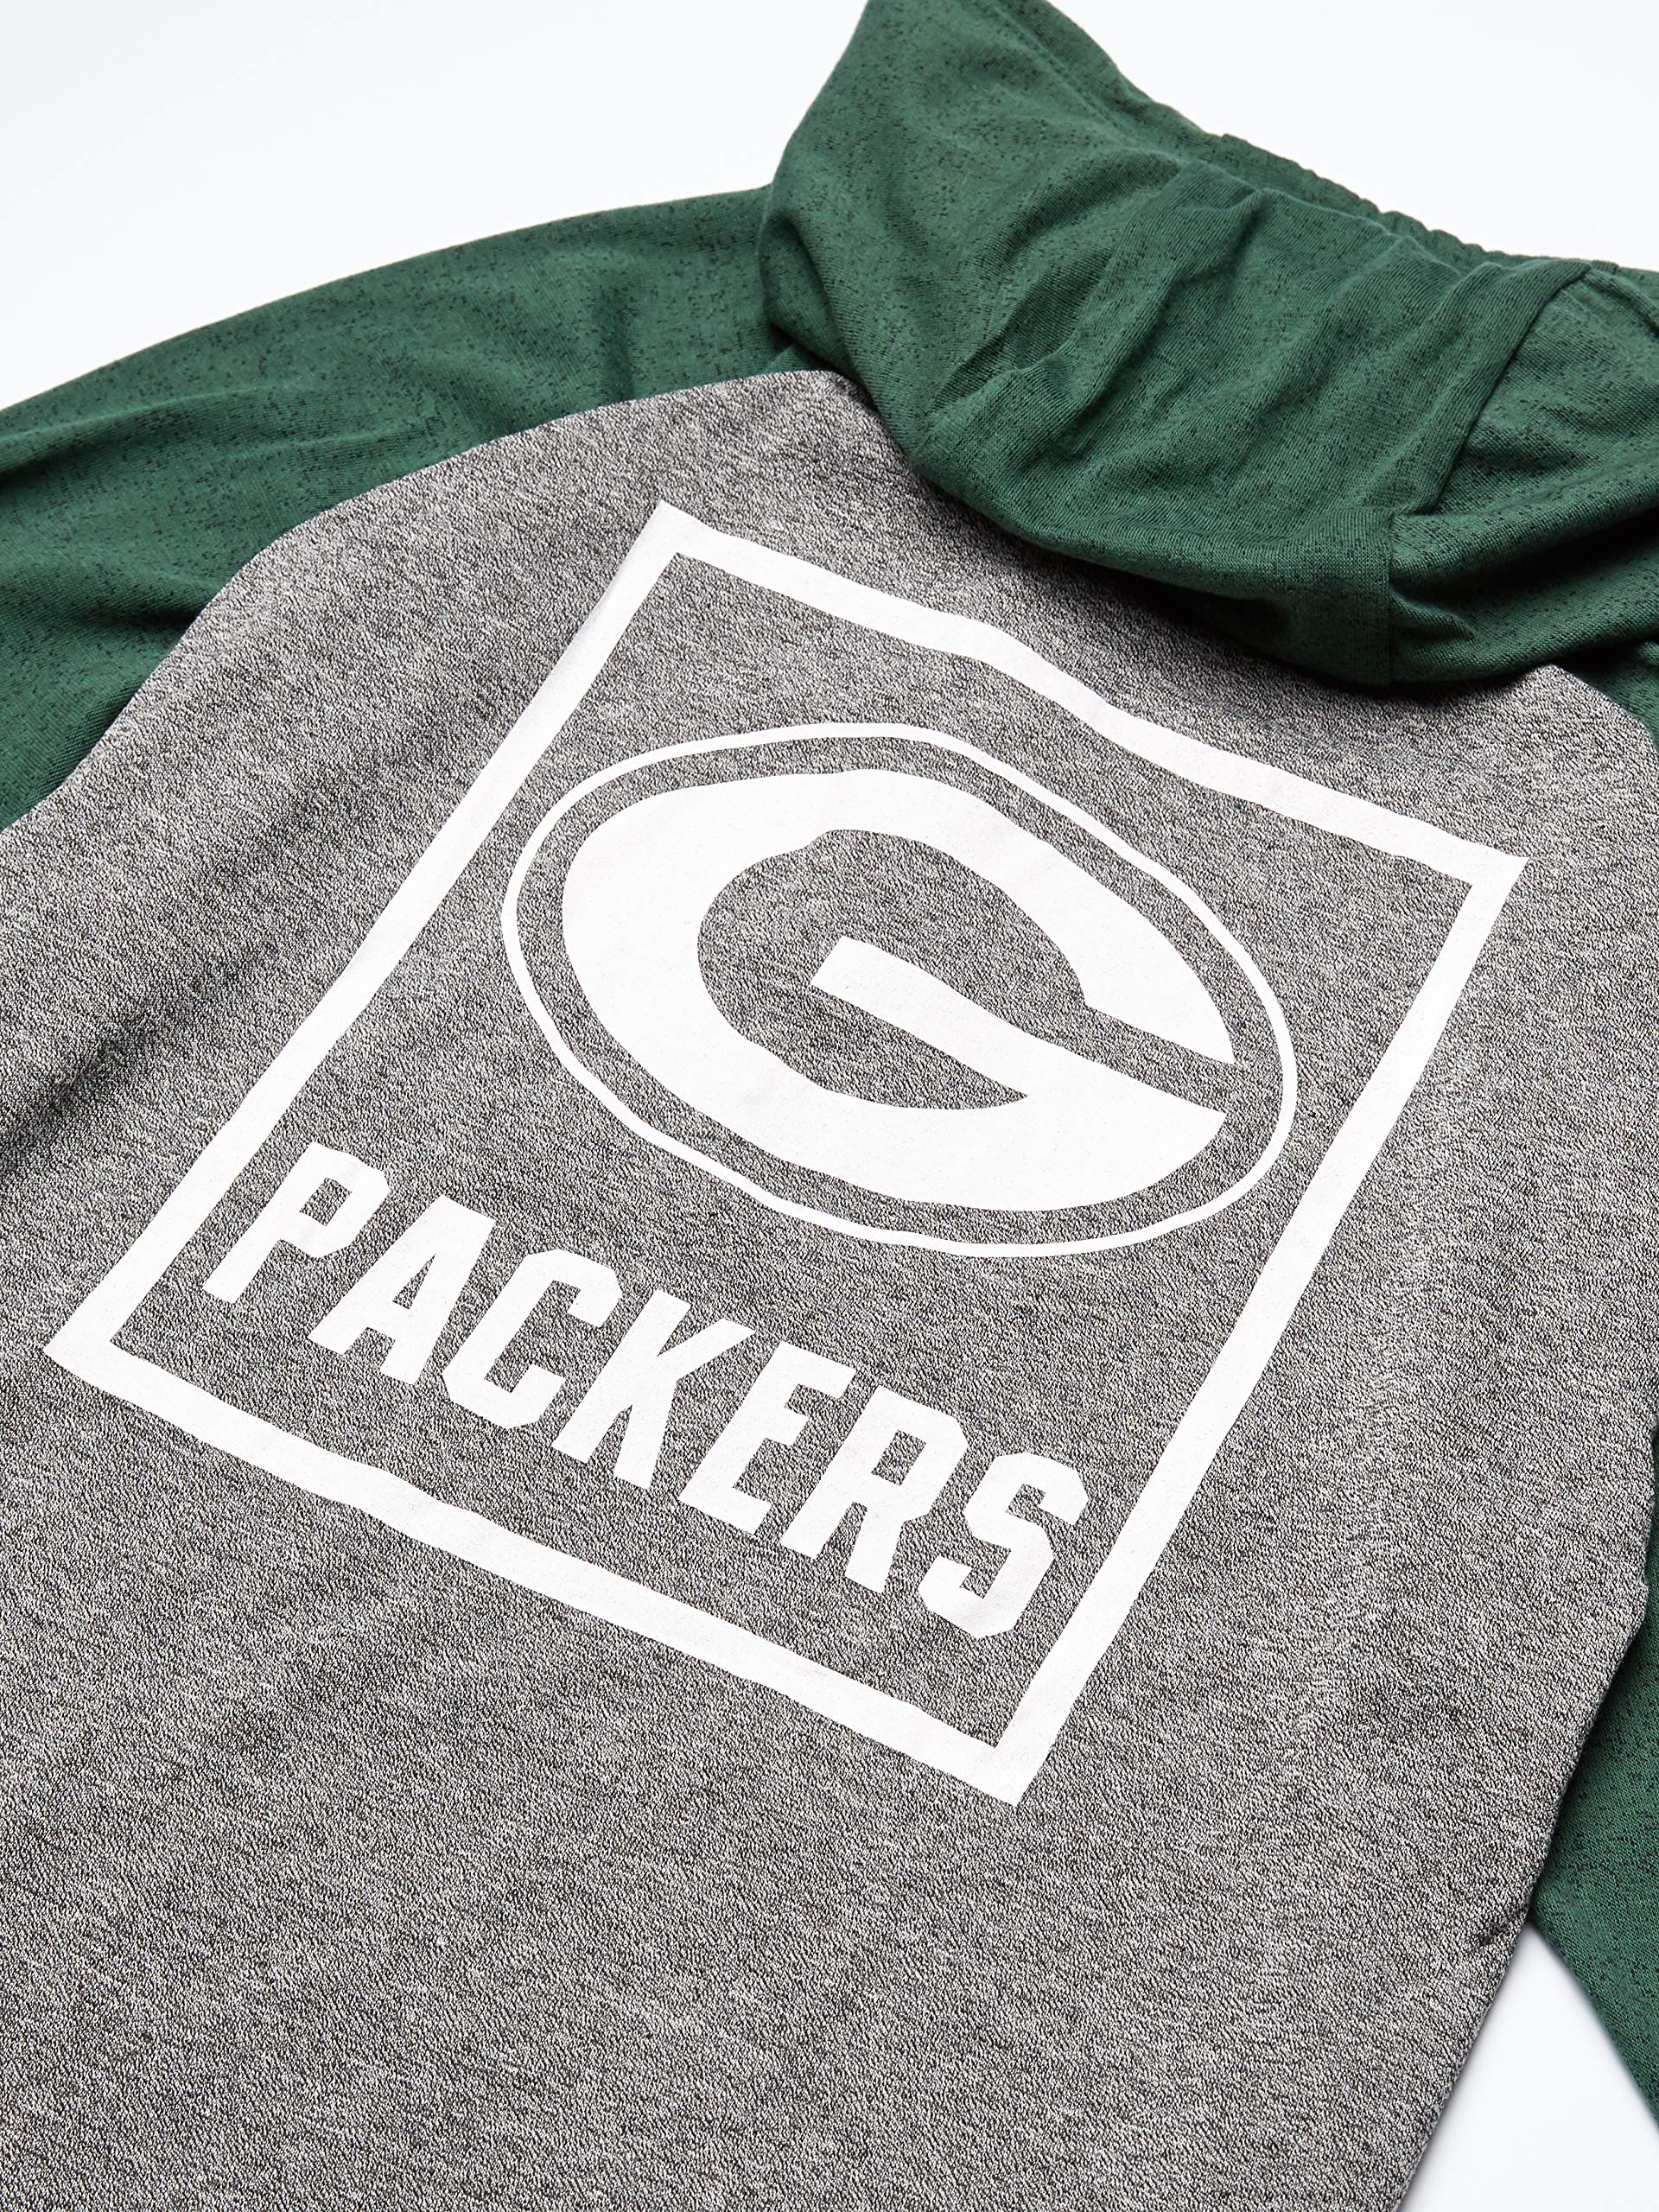 Ultra Game NFL Green Bay Packers Mens Fleece Hoodie Pullover Sweatshirt Henley|Green Bay Packers